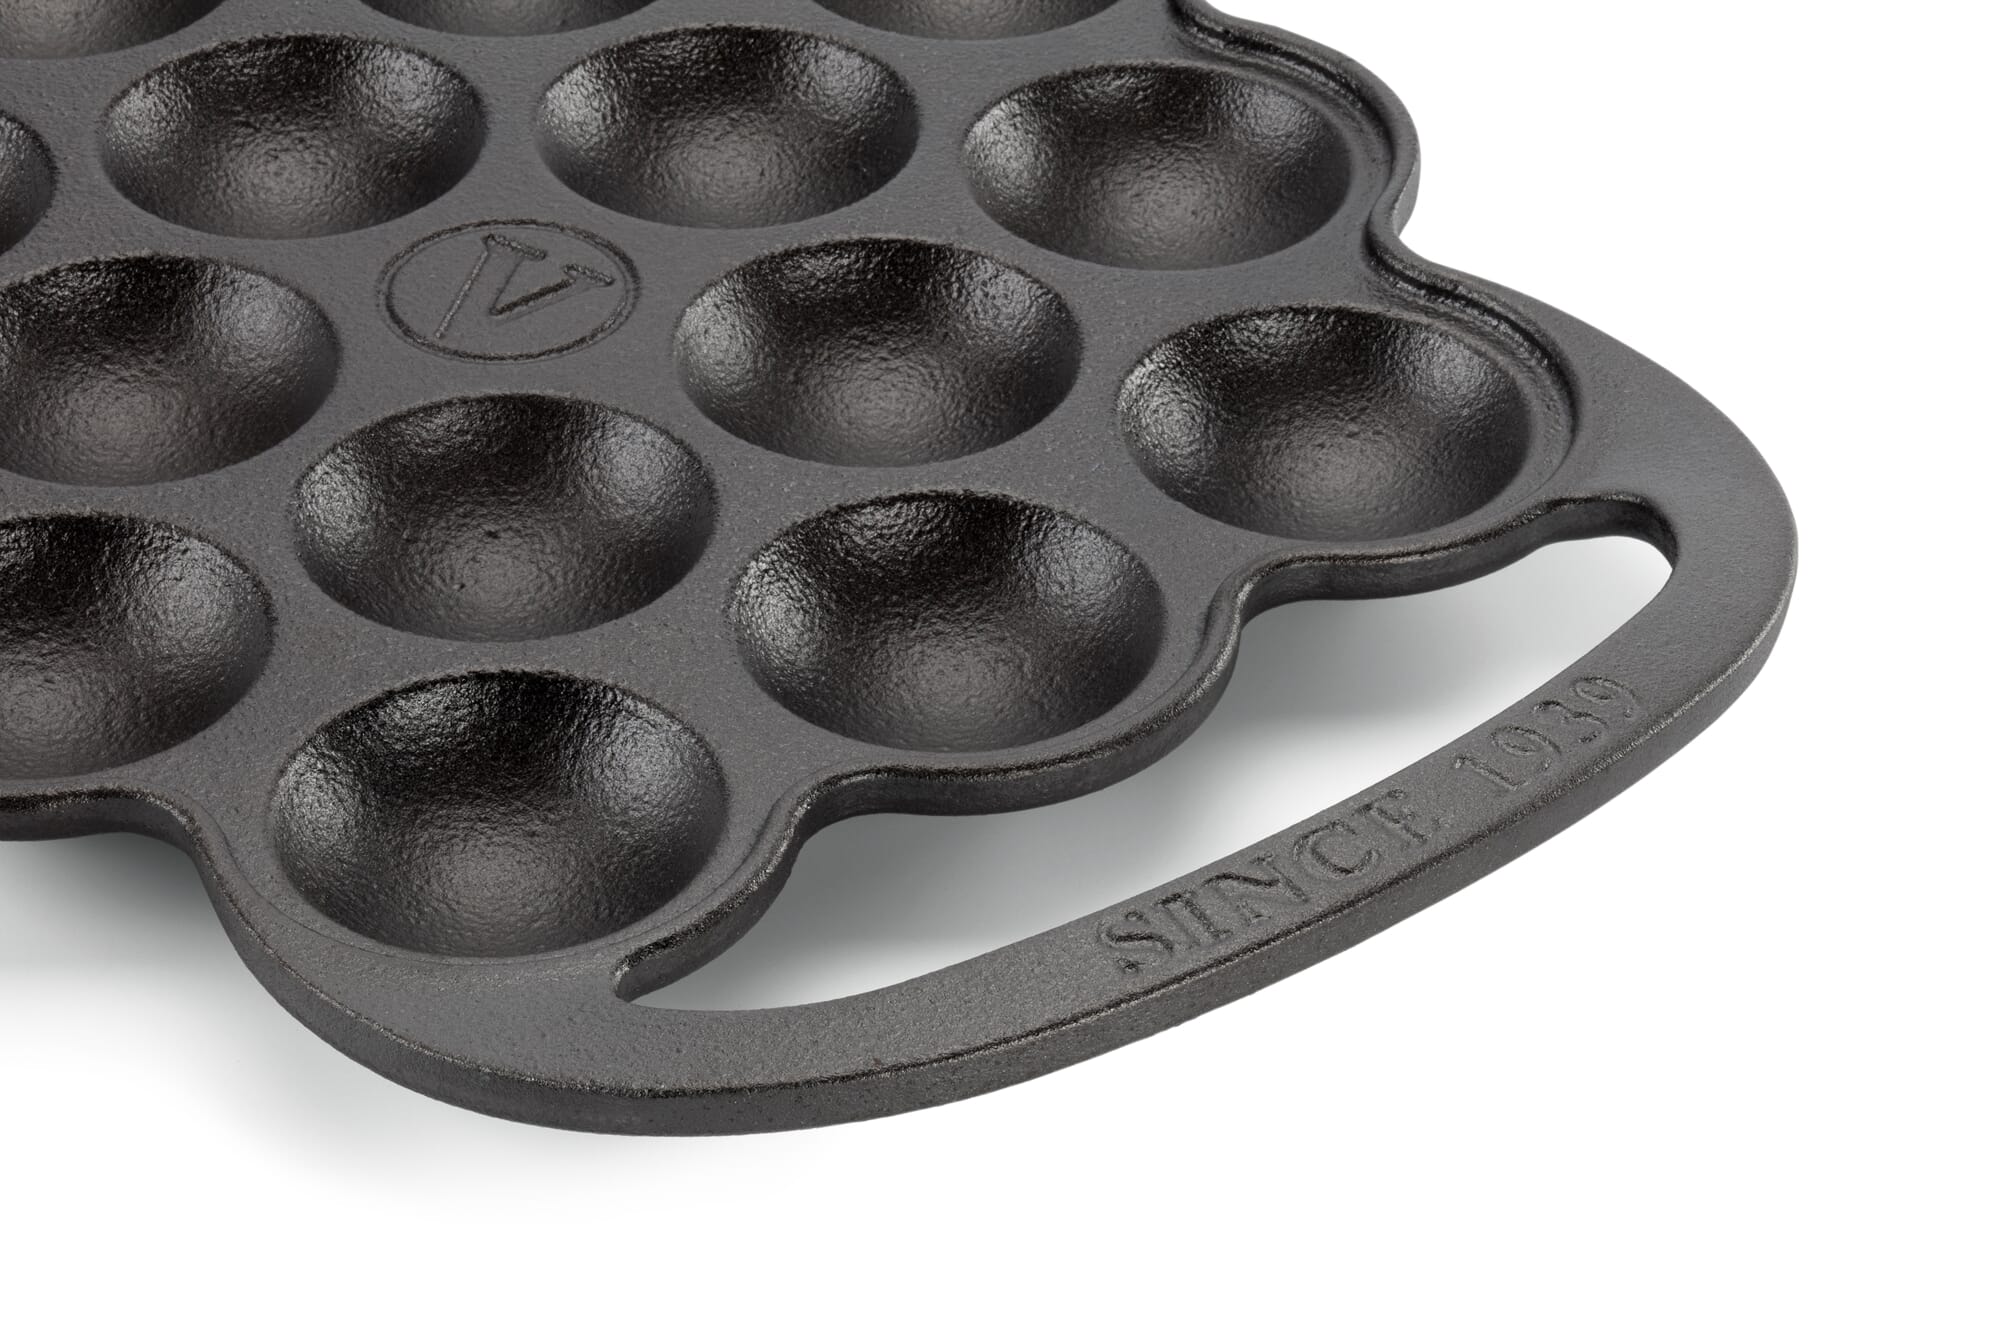 19 Holes Cast Iron Poffertjes Pan For